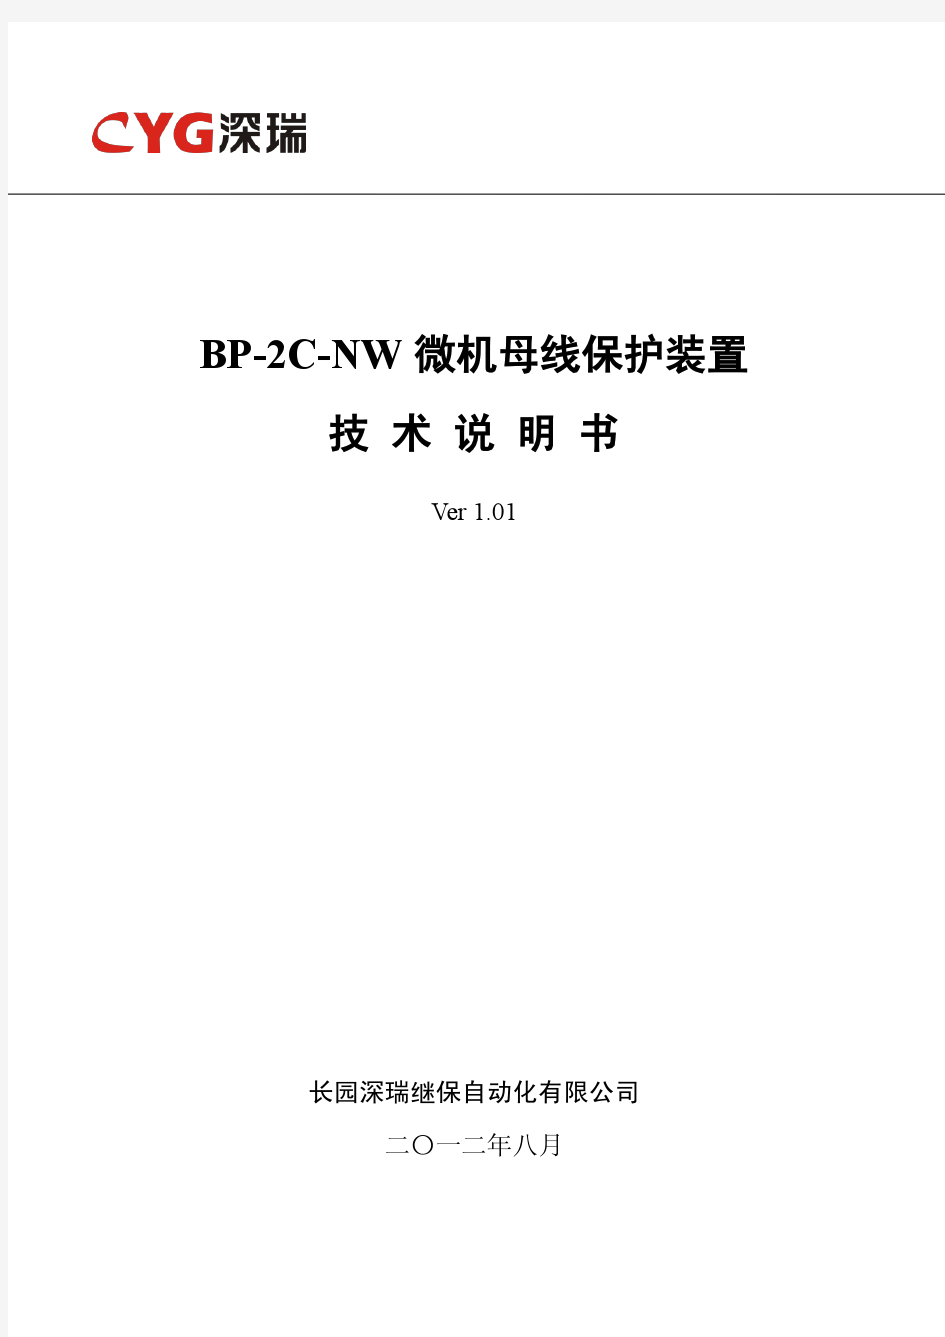 BP-2C-NW微机母线保护装置技术说明书